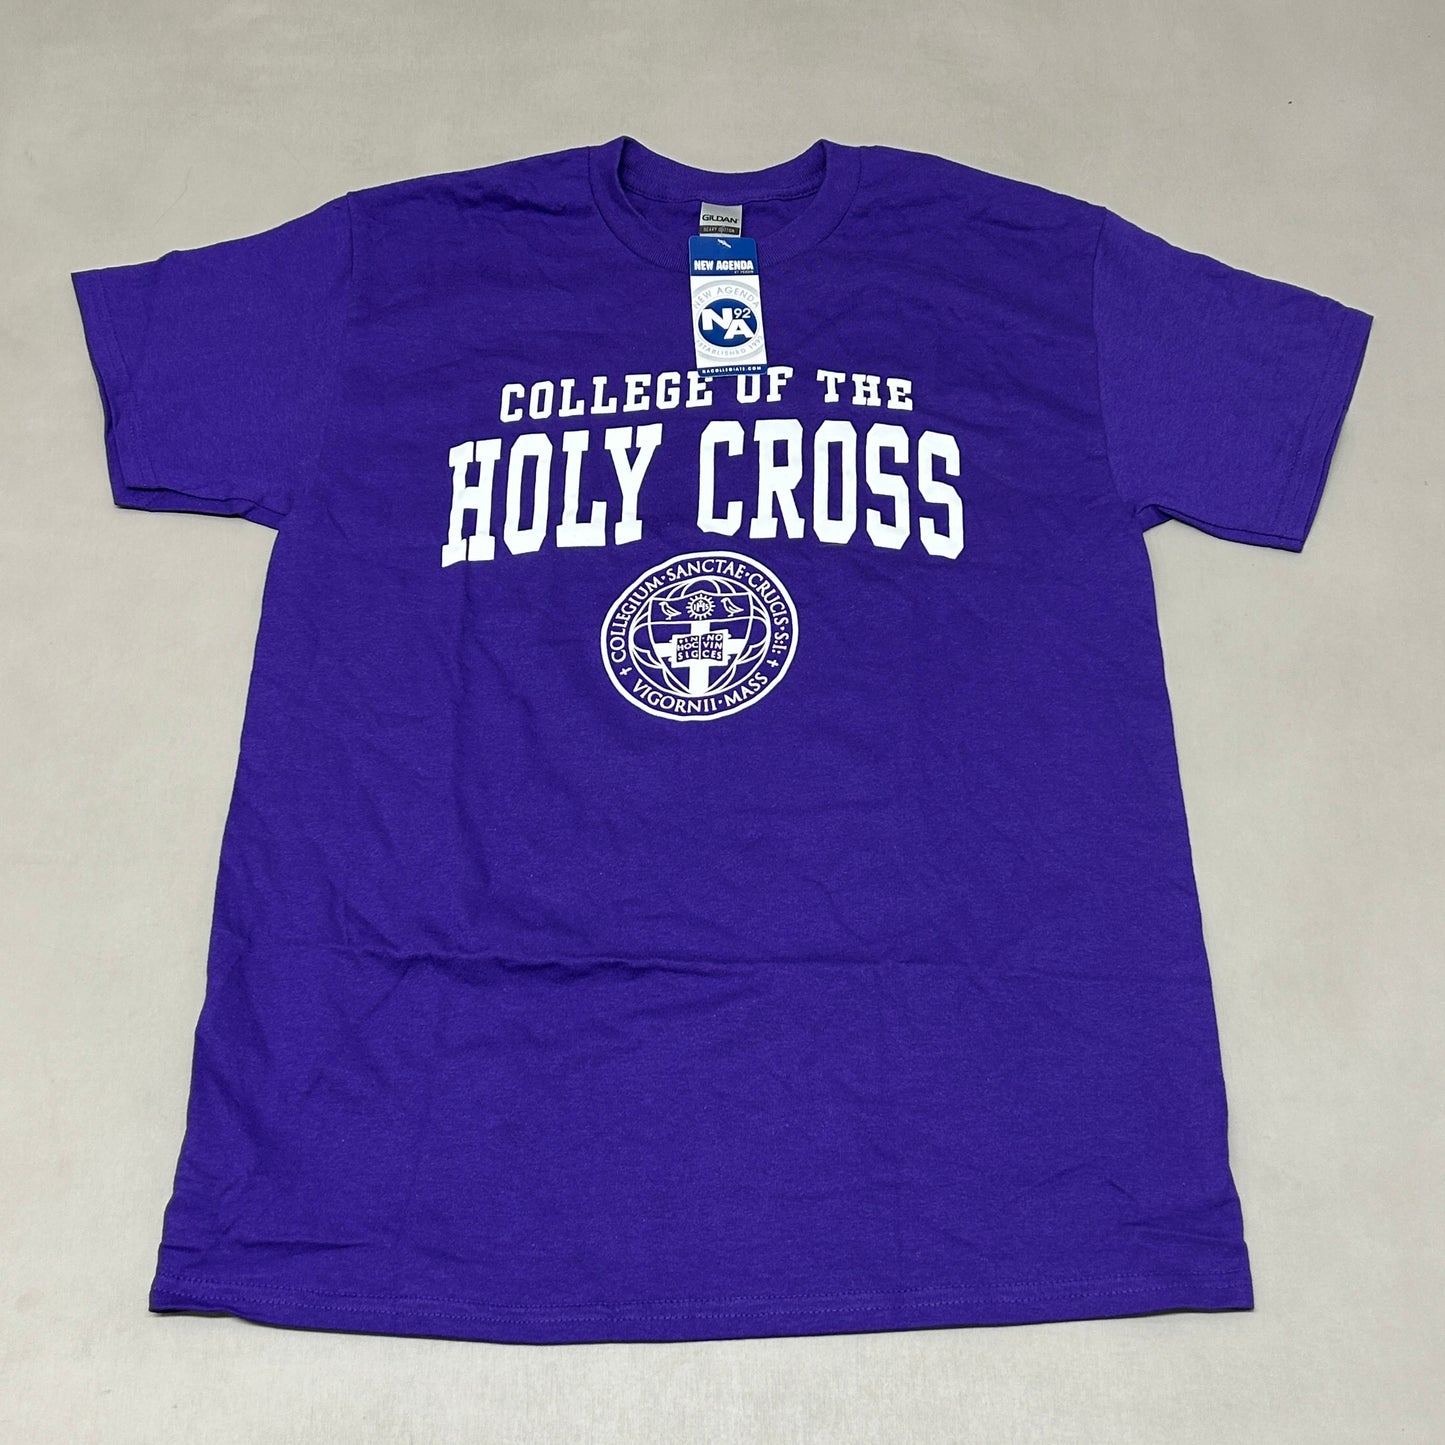 GILDAN College of the Holy Cross Heritage T-Shirt Cotton Unisex Sz Medium Purple (New)